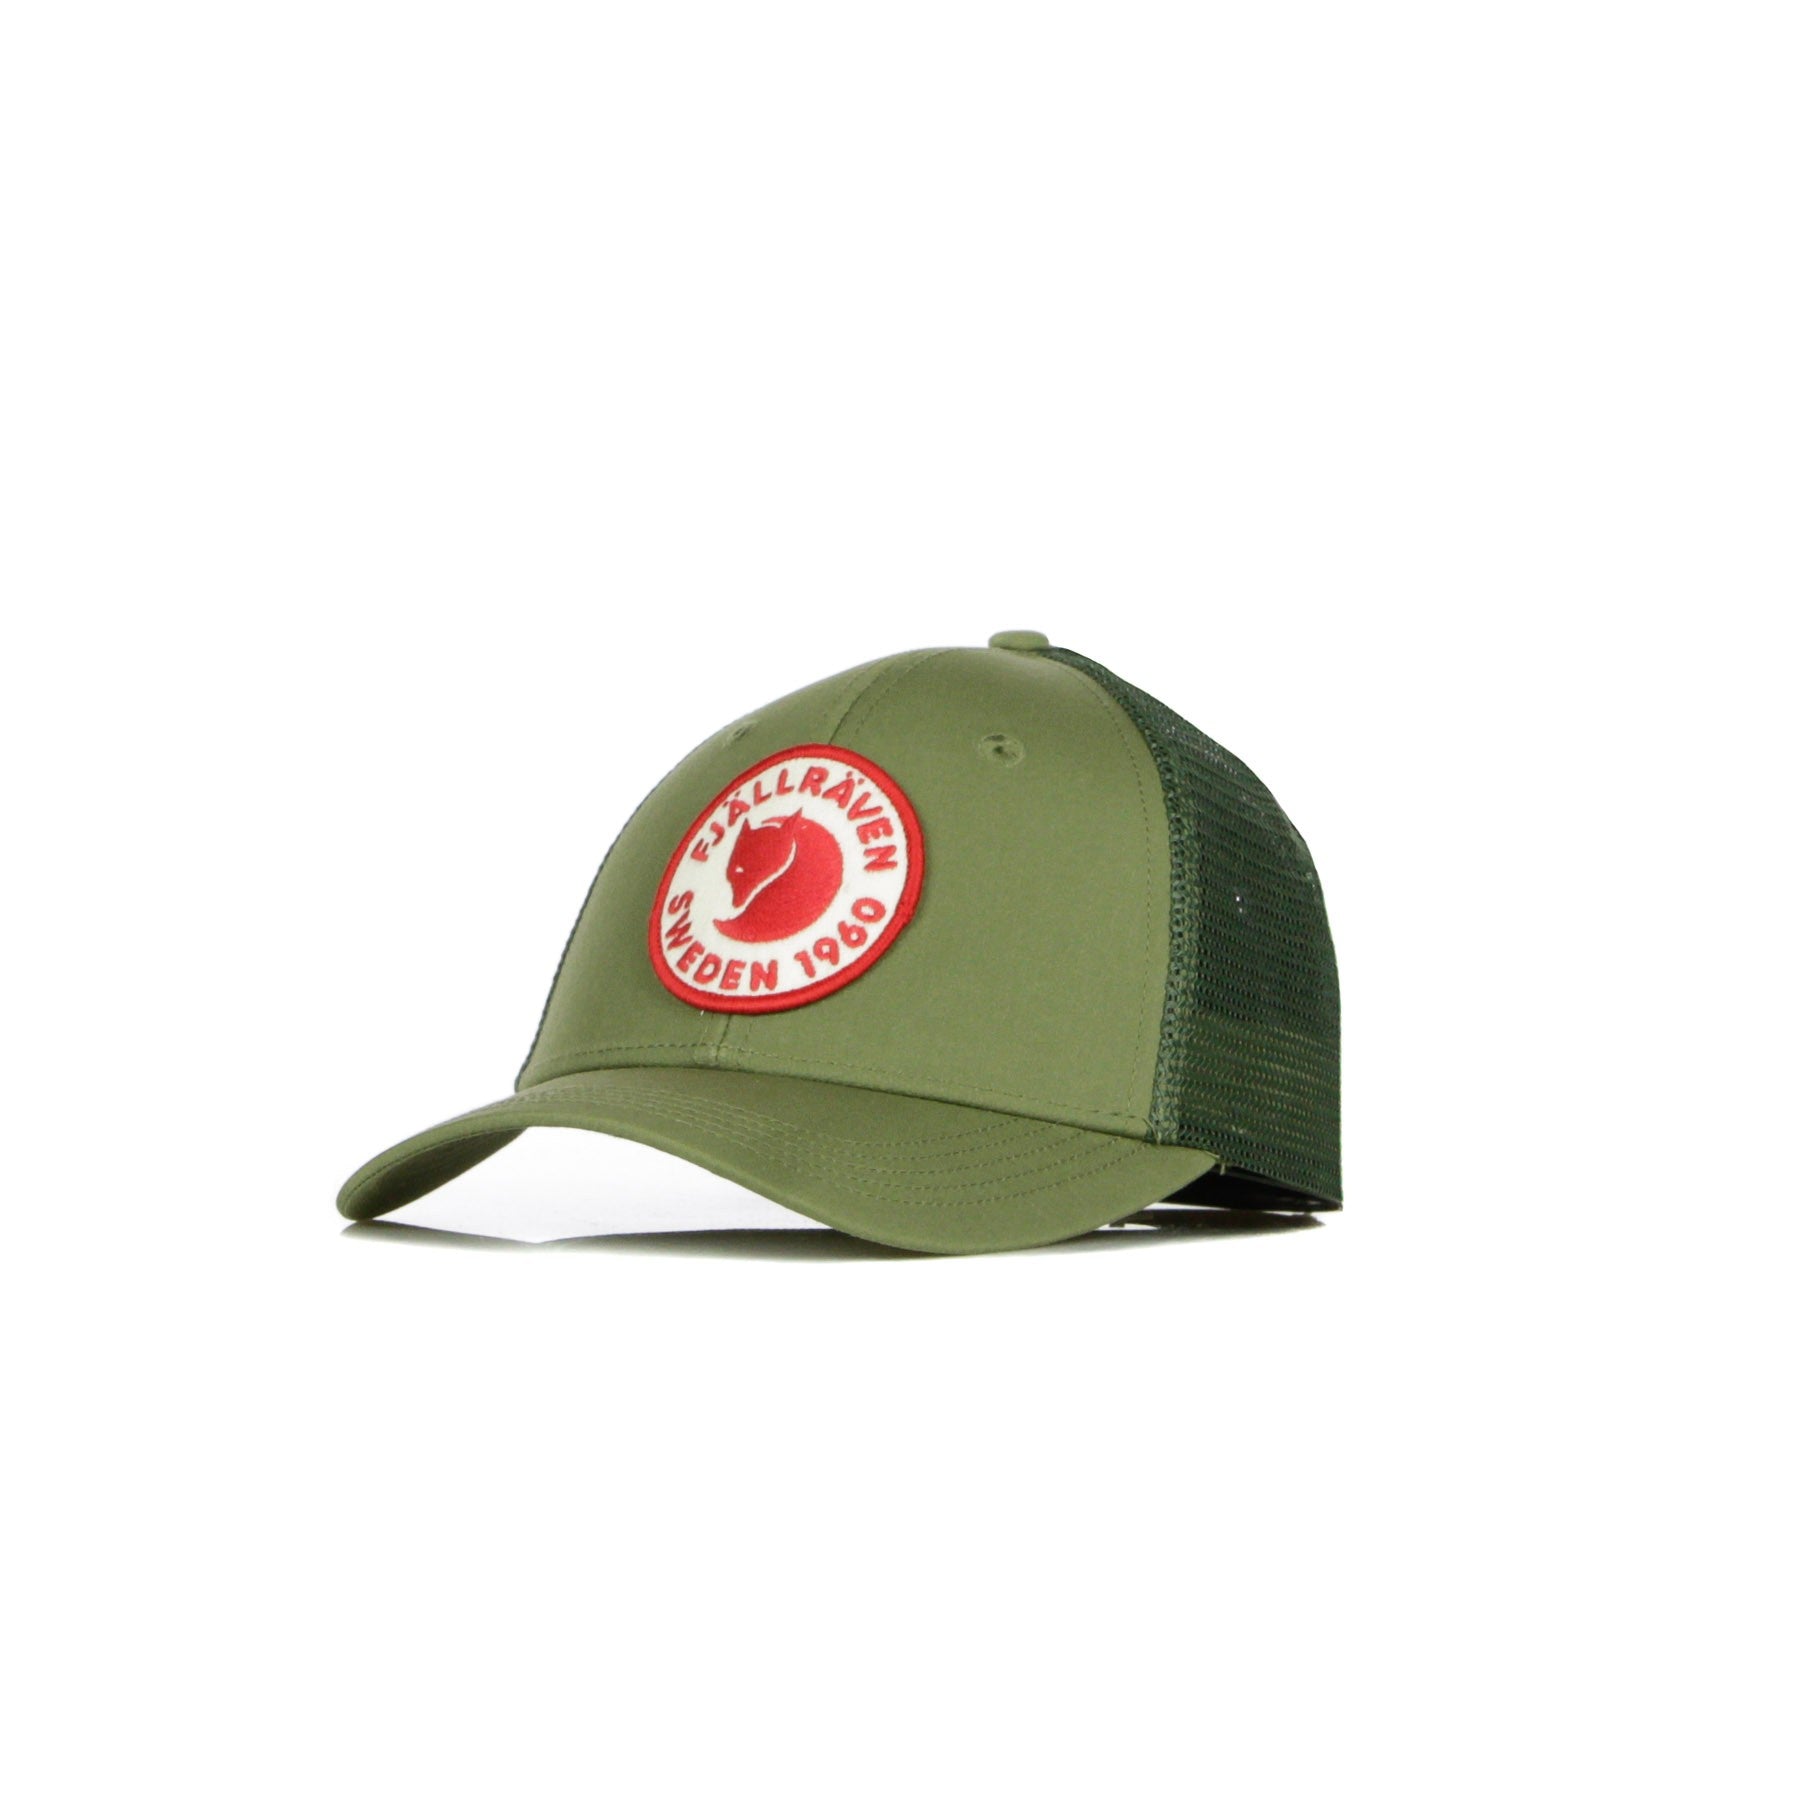 Curved Visor Cap for Men with Langtradarkeps Green Logo